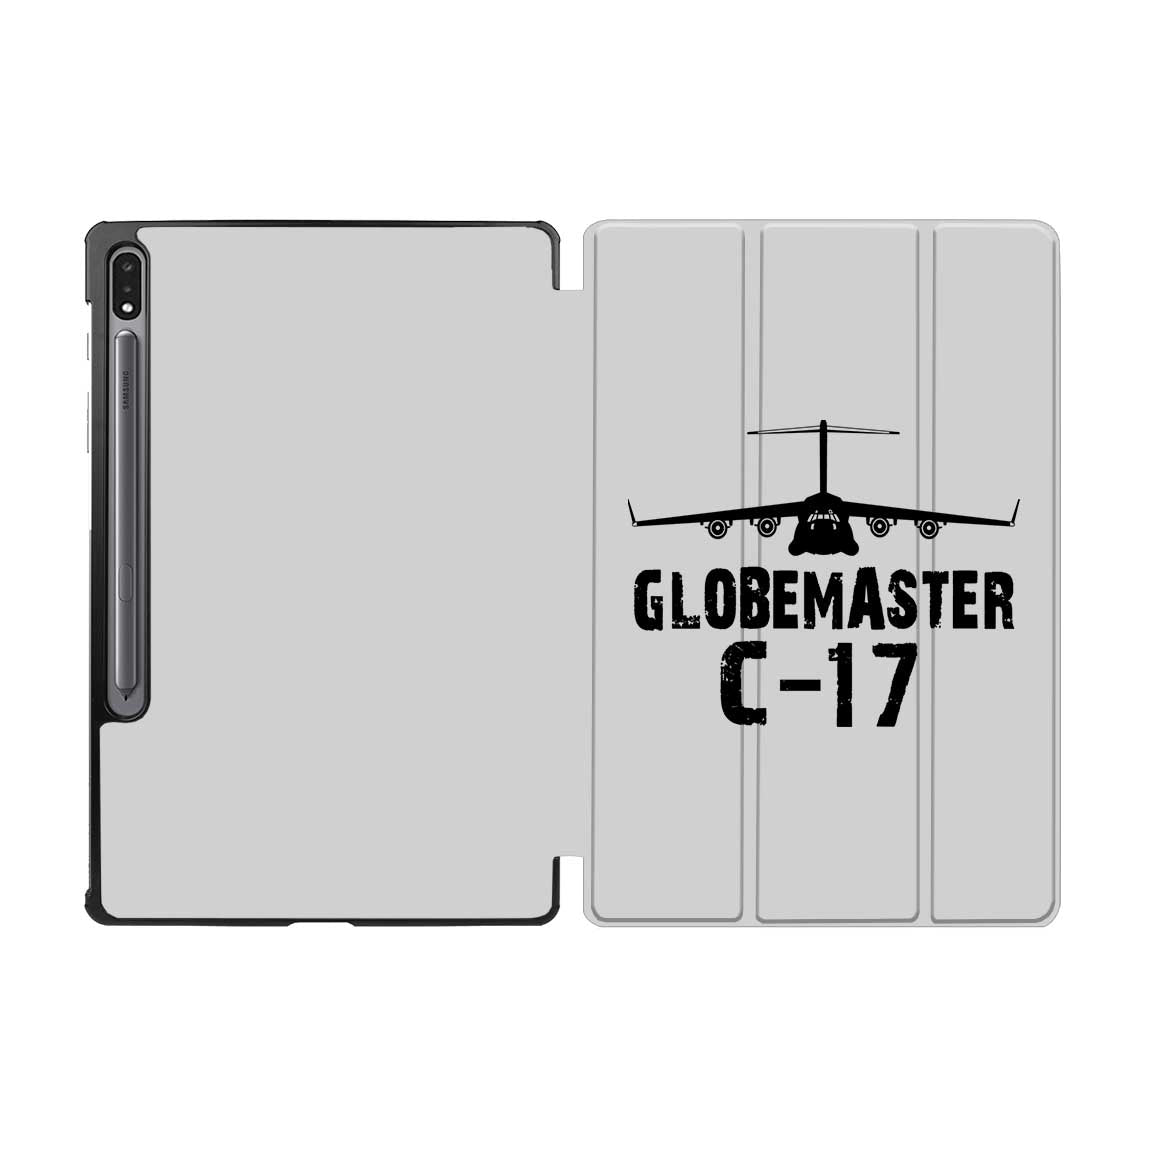 GlobeMaster C-17 & Plane Designed Samsung Tablet Cases